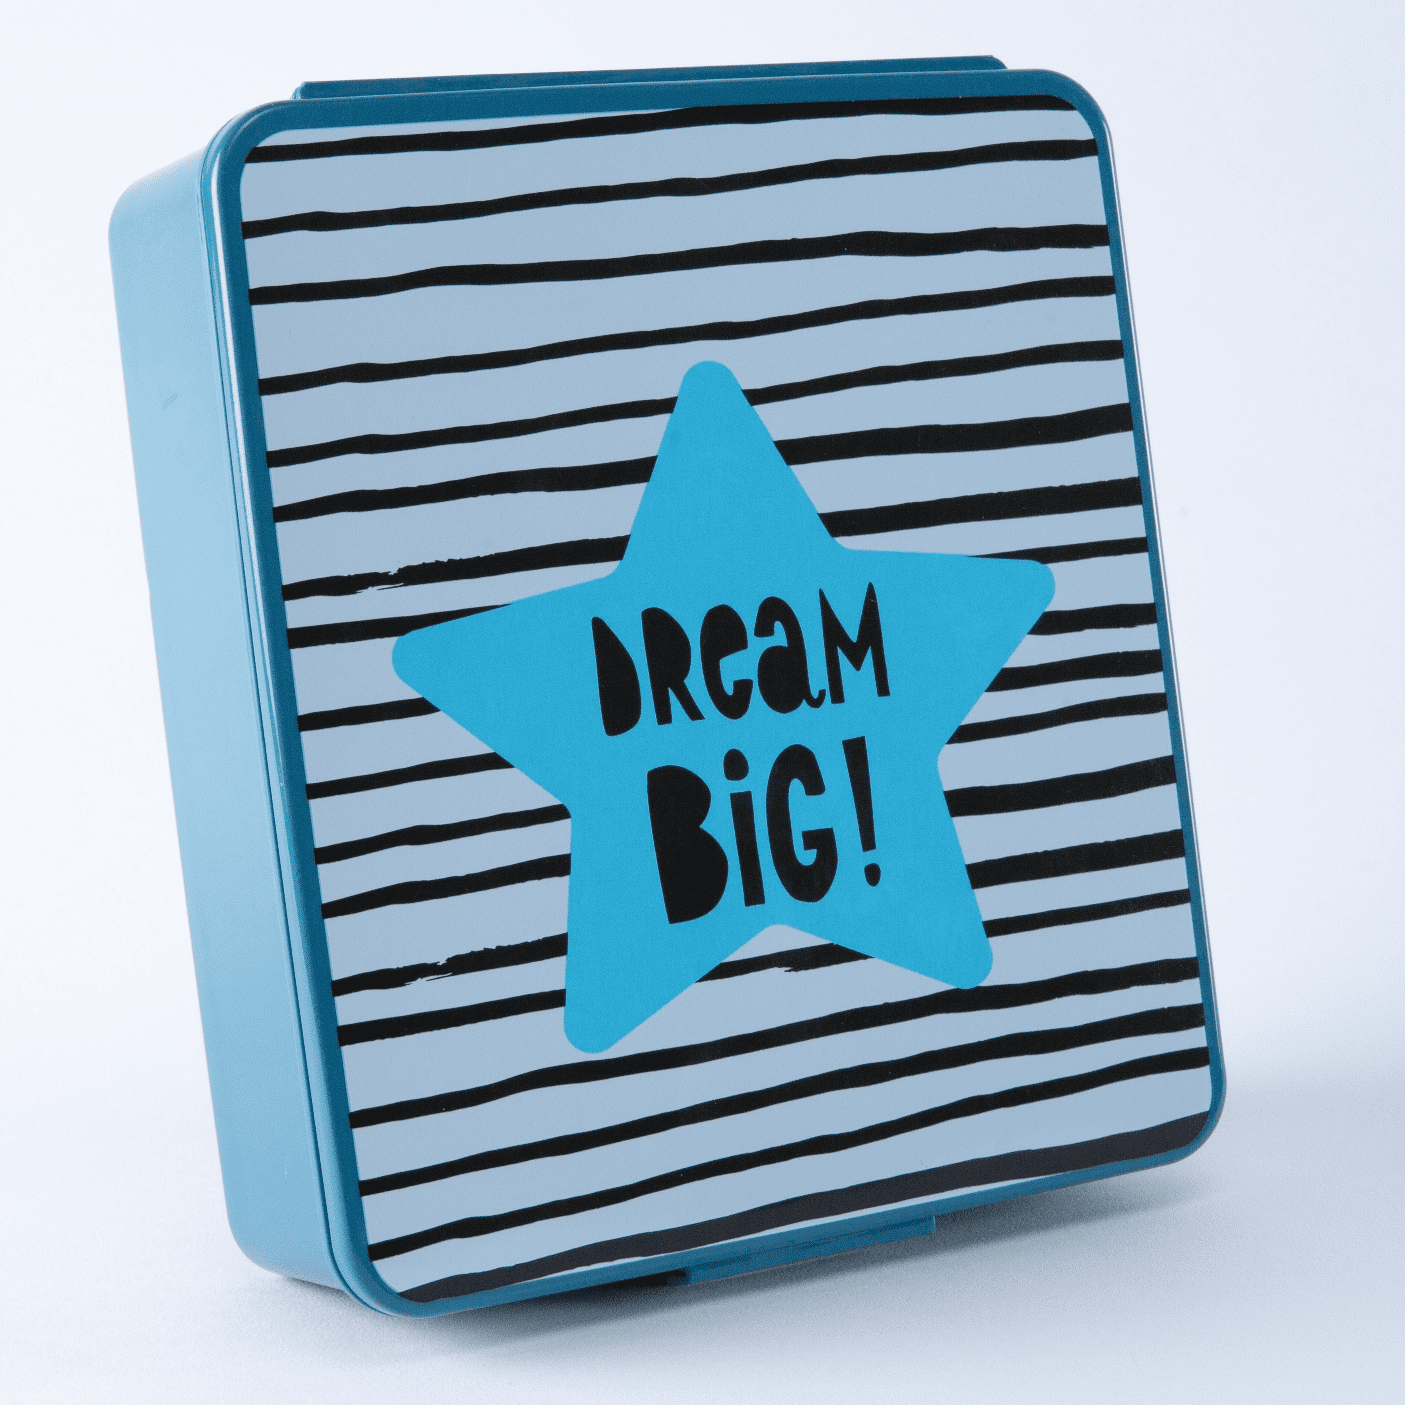 Your Zone Plastic 8" x 7" Blue Rectangular Bento Box - Dream Big Pattern